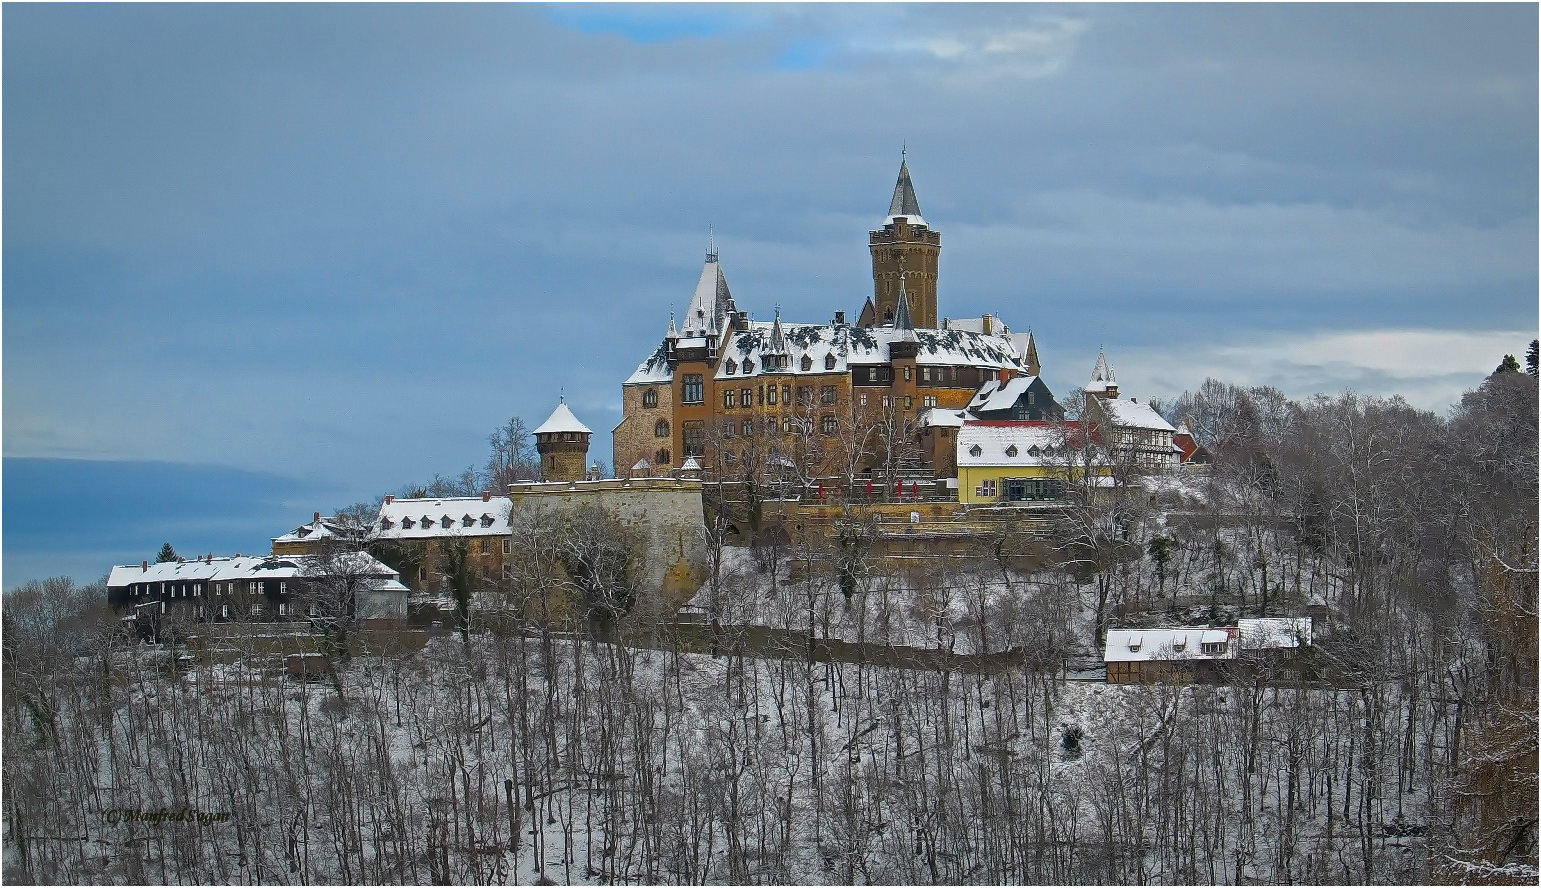 Schloss Wernigerode - meine alte Heimat